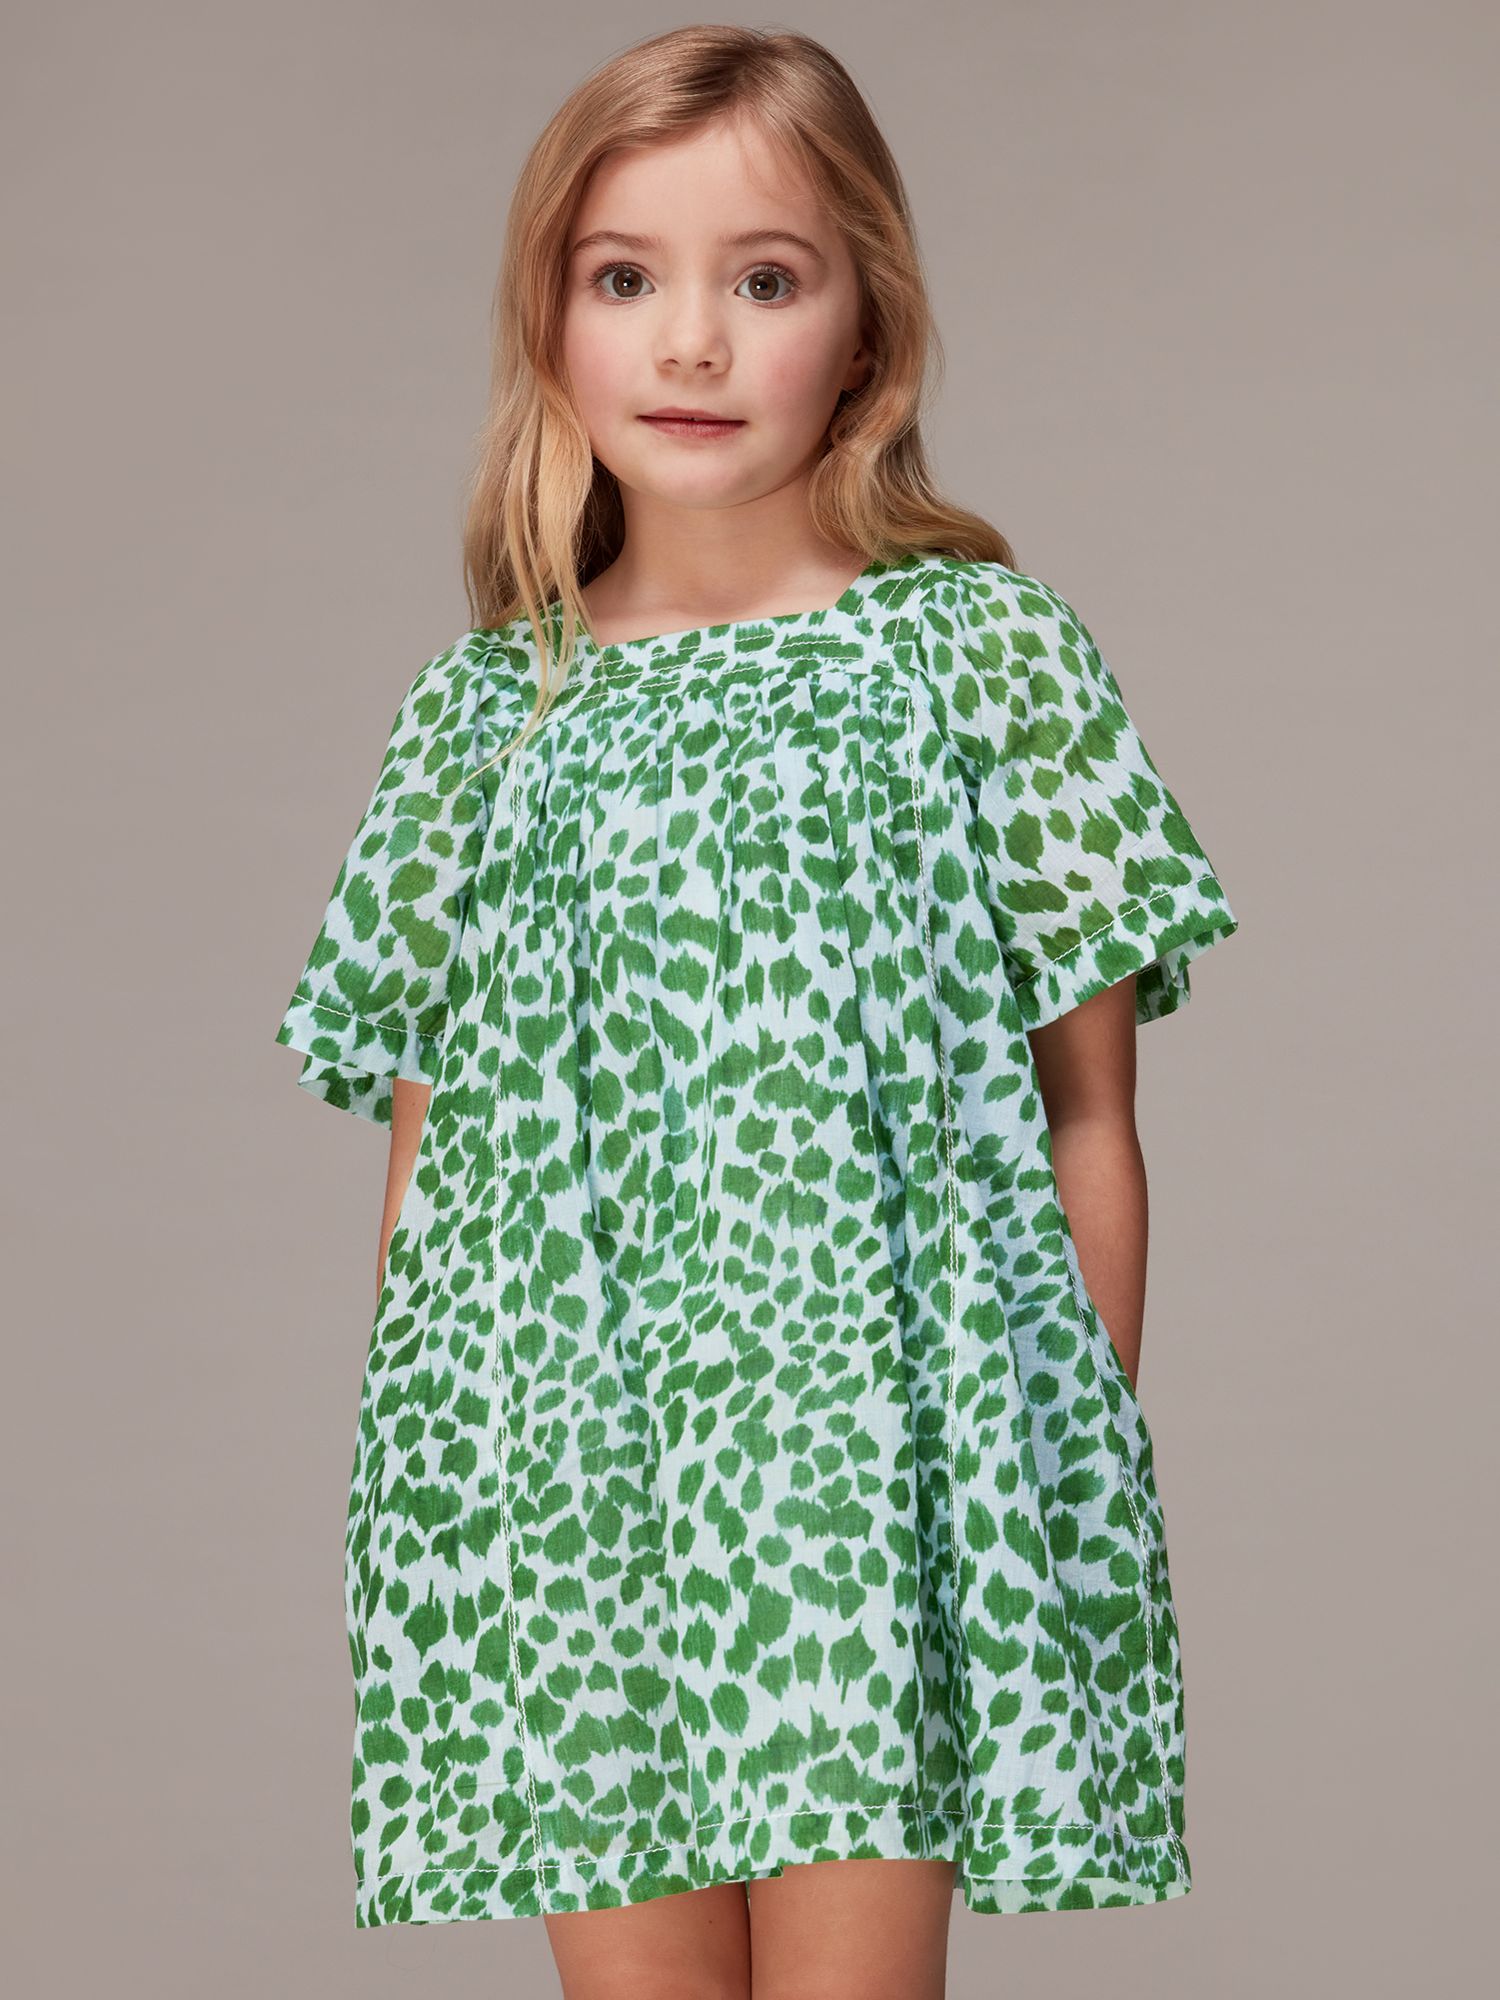 Whistles Kids' Leopard Print Cotton Trapeze Dress, Green/Multi, 4-5 years